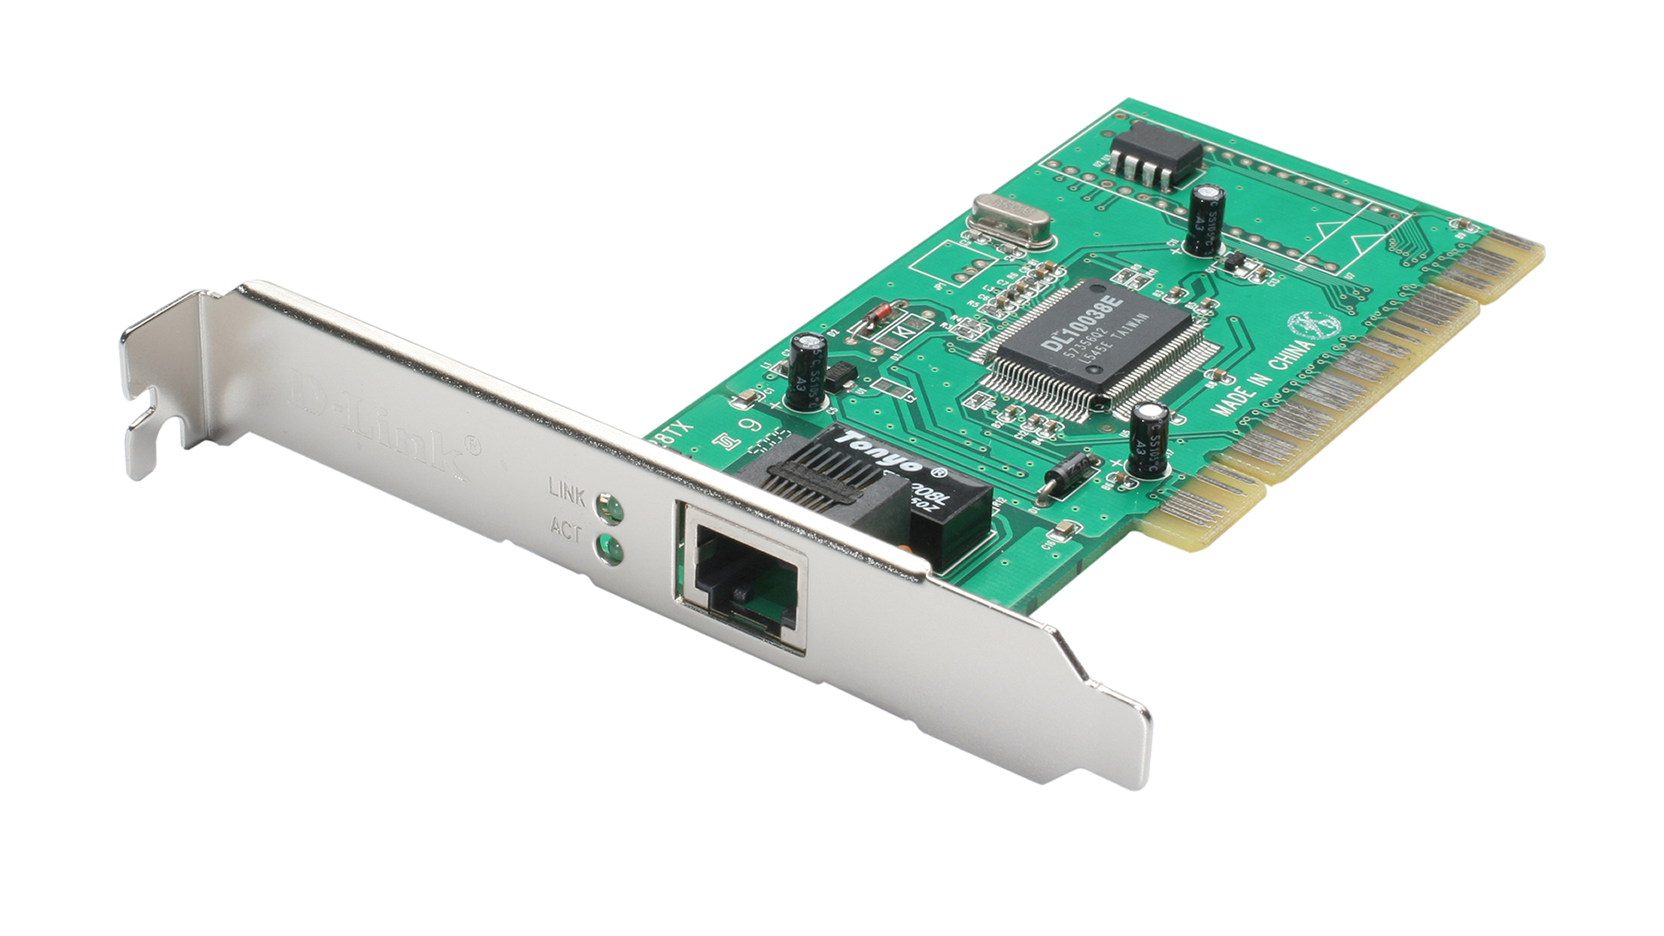 Сетевая карта d link. D-link DFE-520tx PCI. DFE-520tx 10/100mbps Ethernet PCI Adapter. D-link DFE-520tx 10base-t/100 Base-ТХ PCI. Адаптер сетевой Ethernet Acorp l-100s PCI.